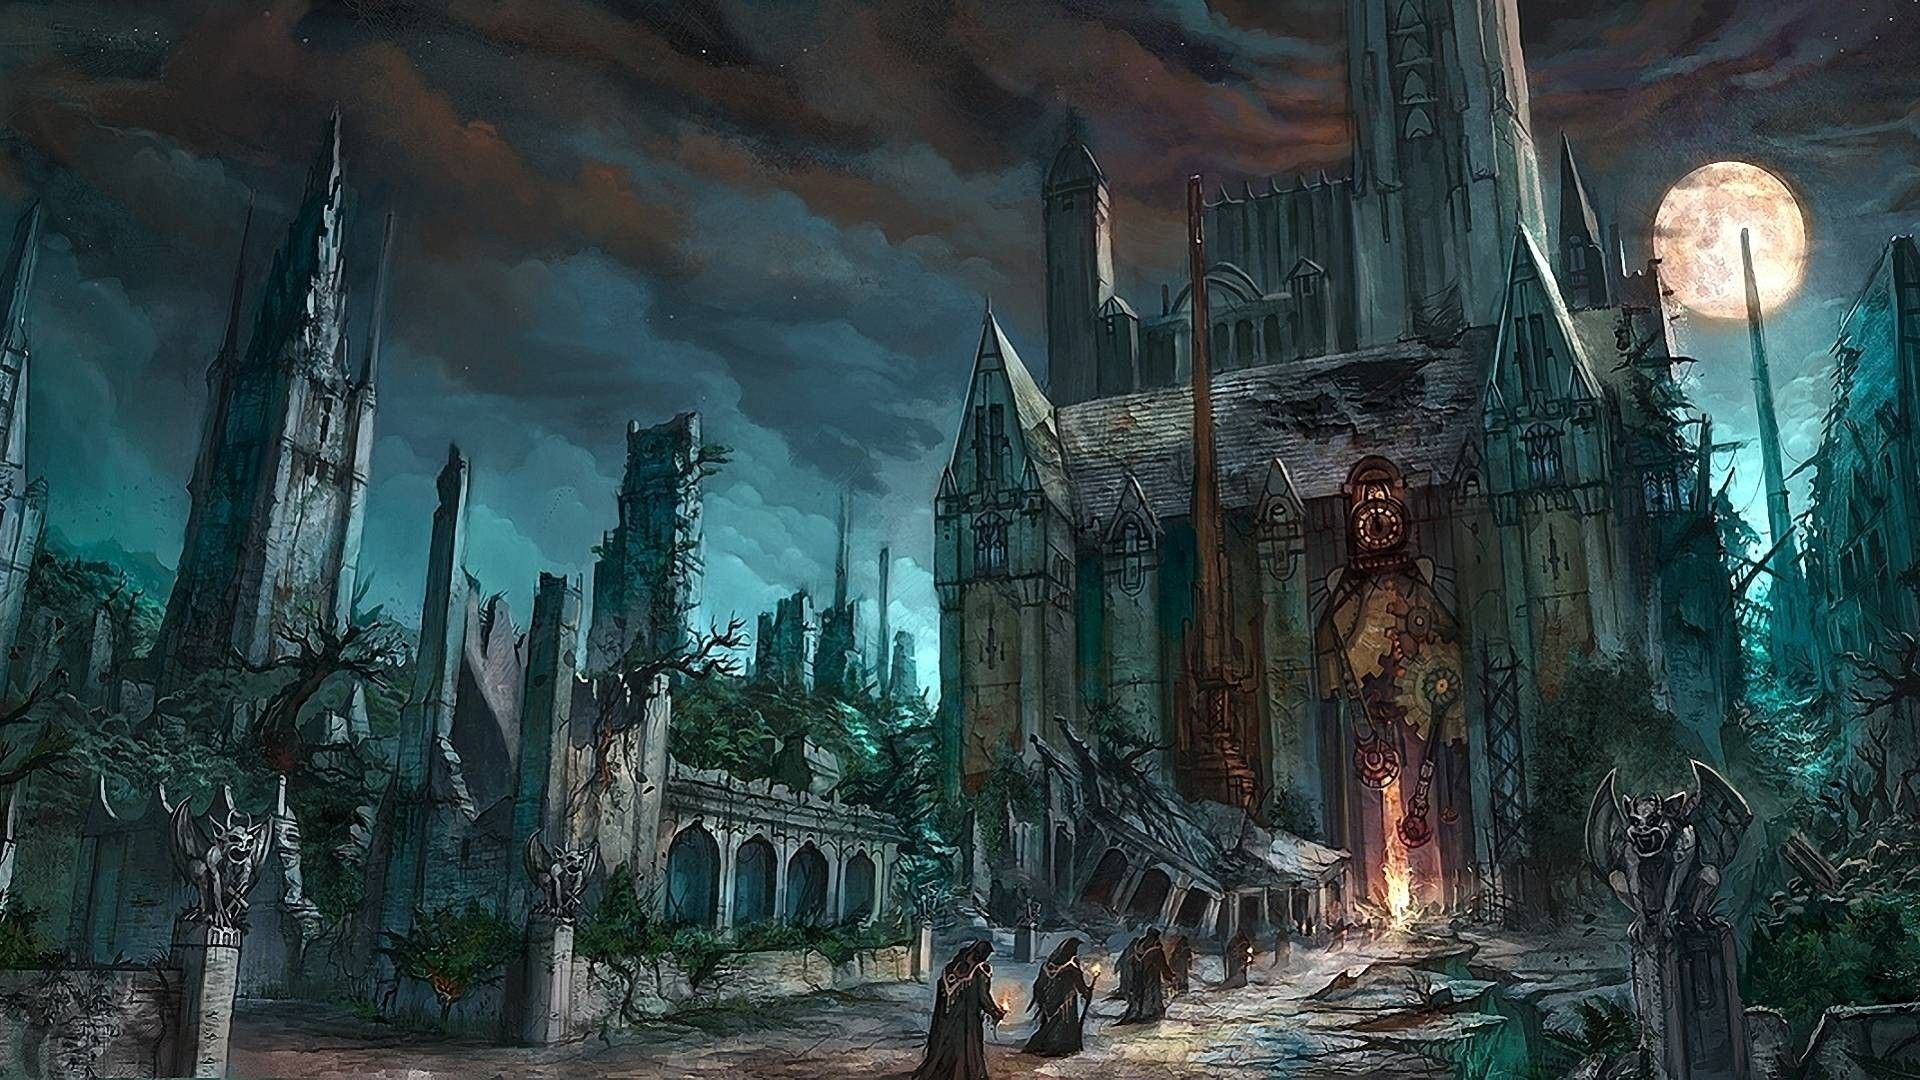 Dark fantasy art of a gothic city at night - Castle